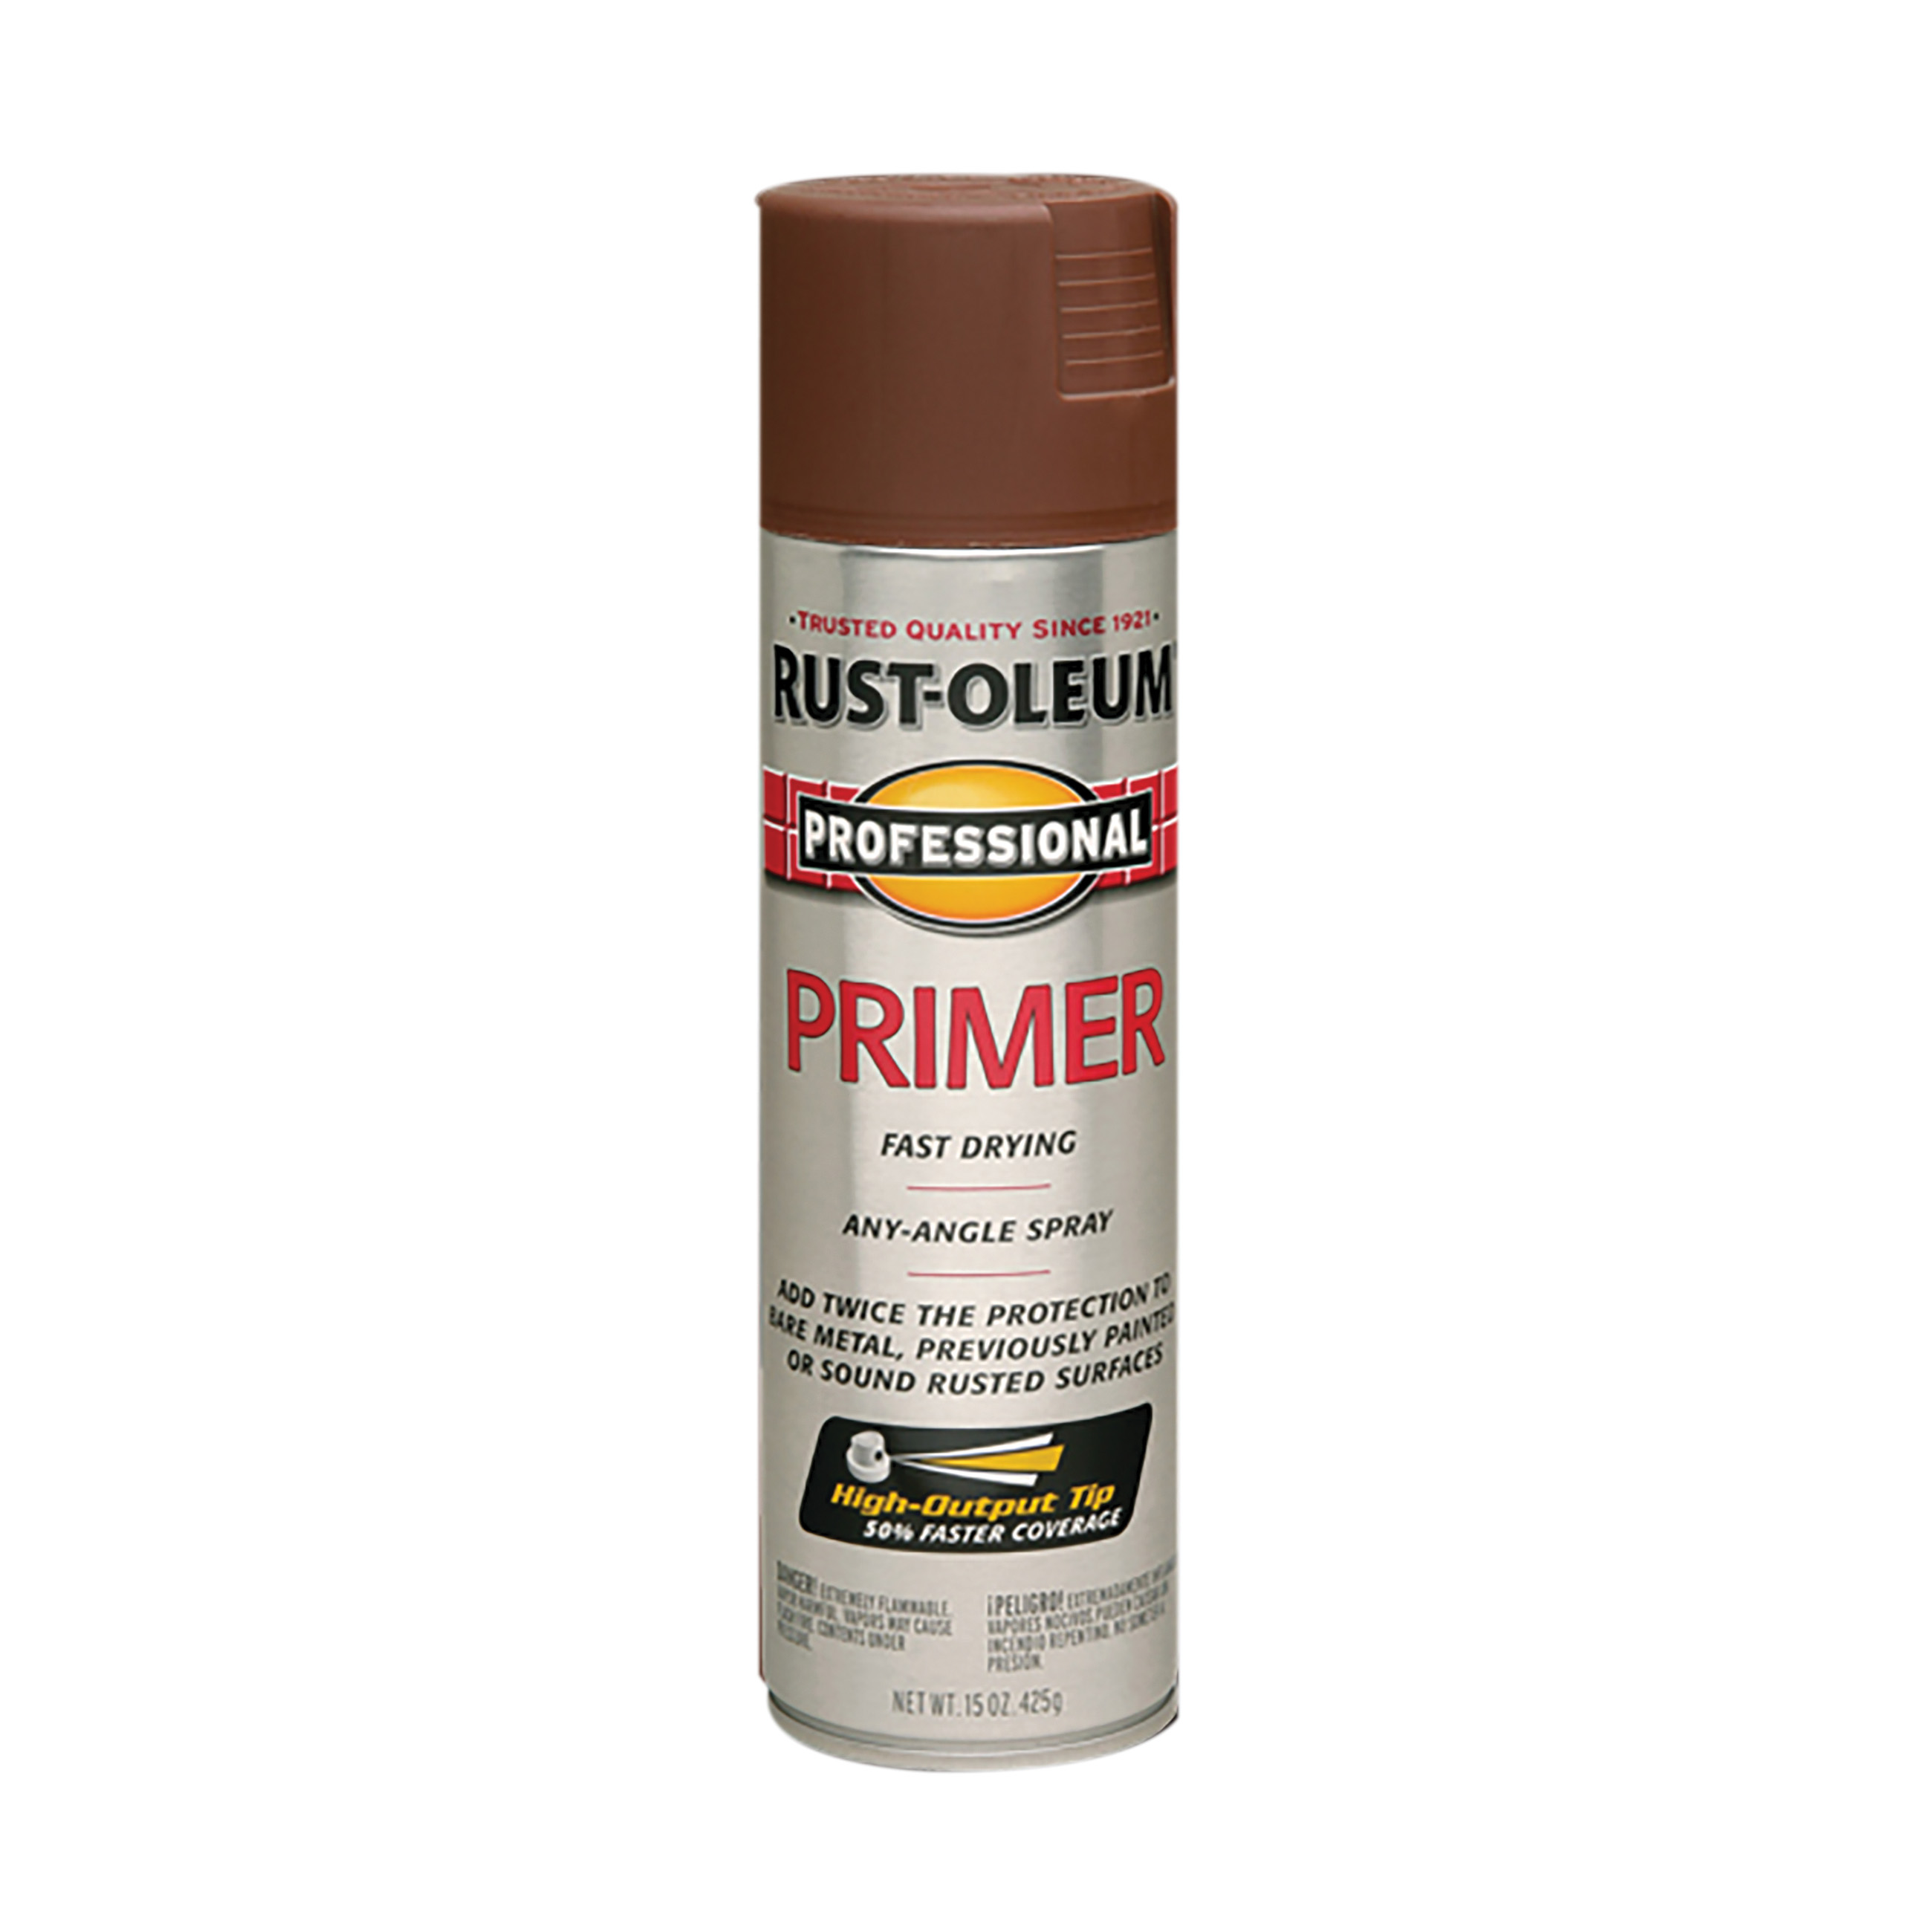 RUST-OLEUM PROFESSIONAL 7569838 Primer Spray, Red, Flat, 15 oz - 1